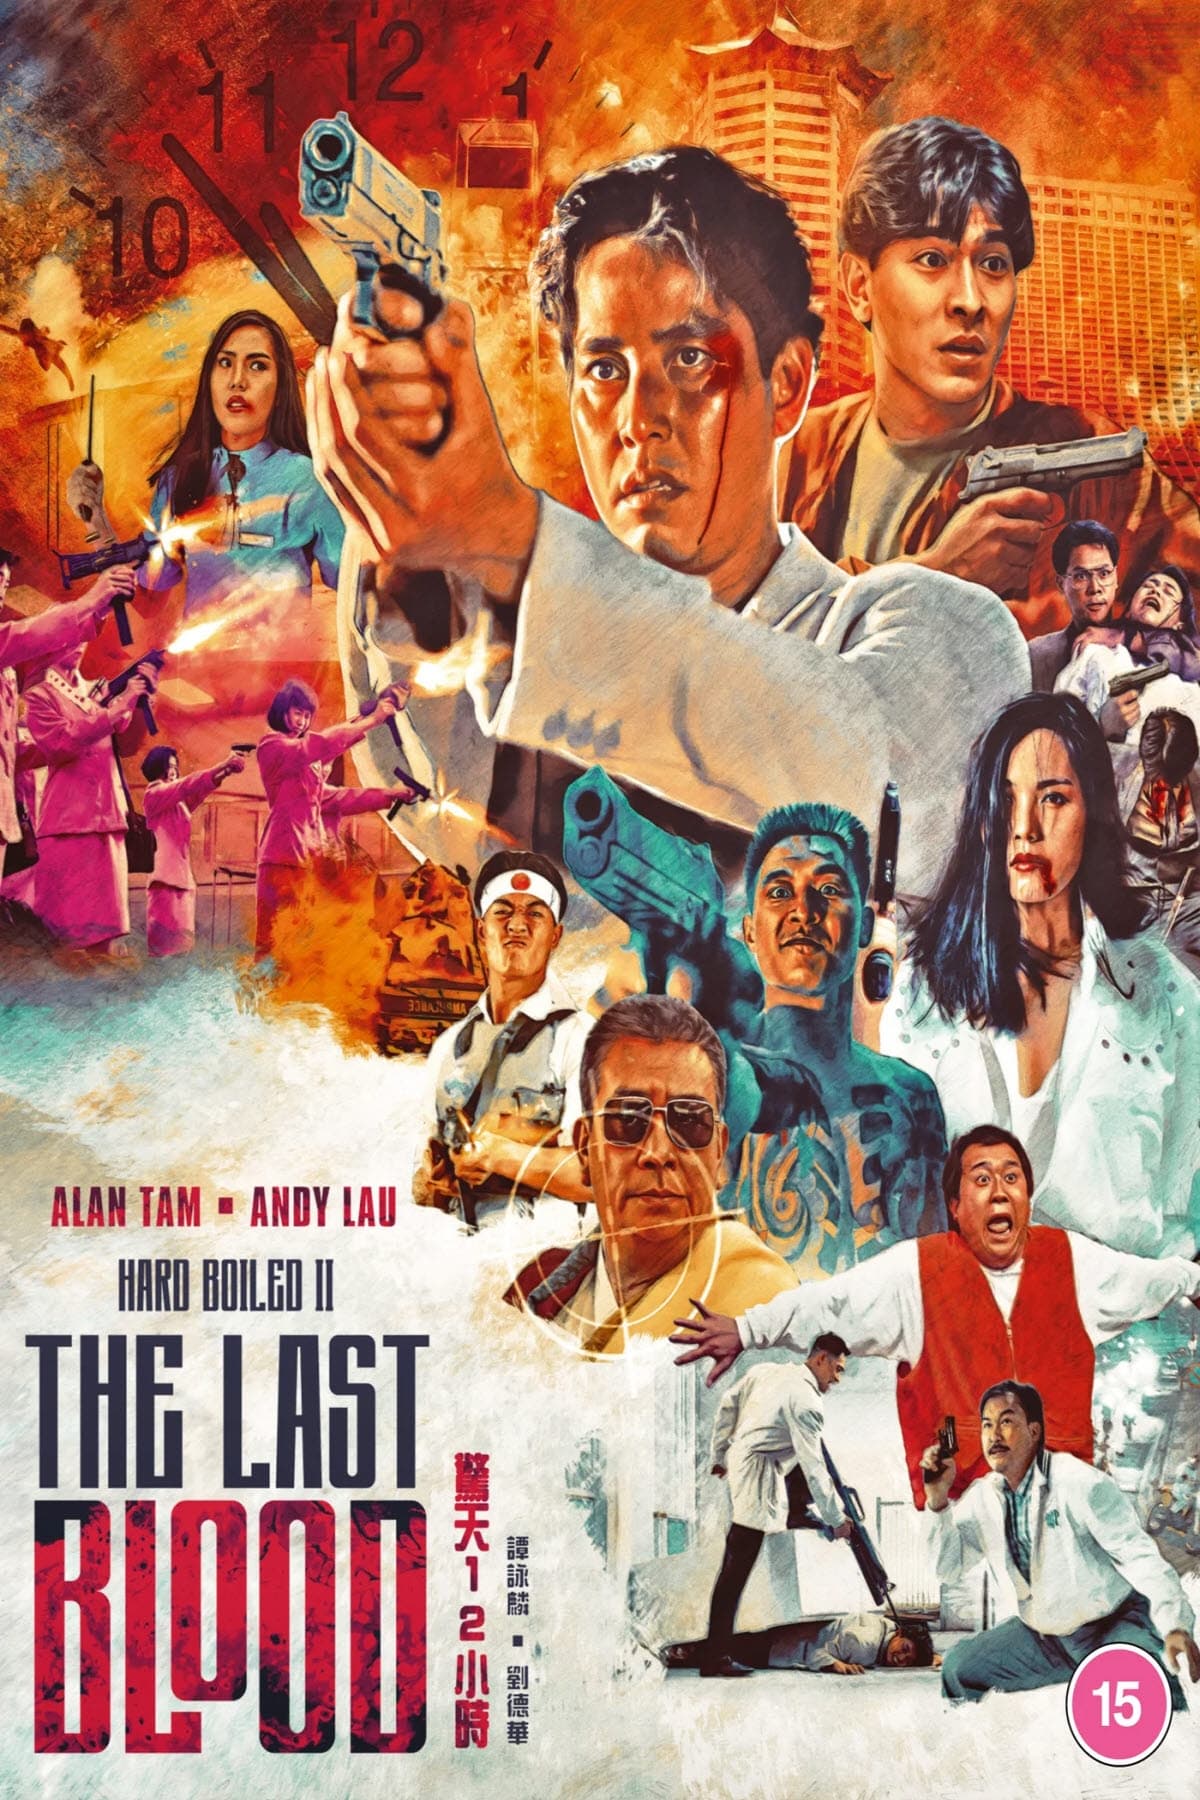 The Last Blood